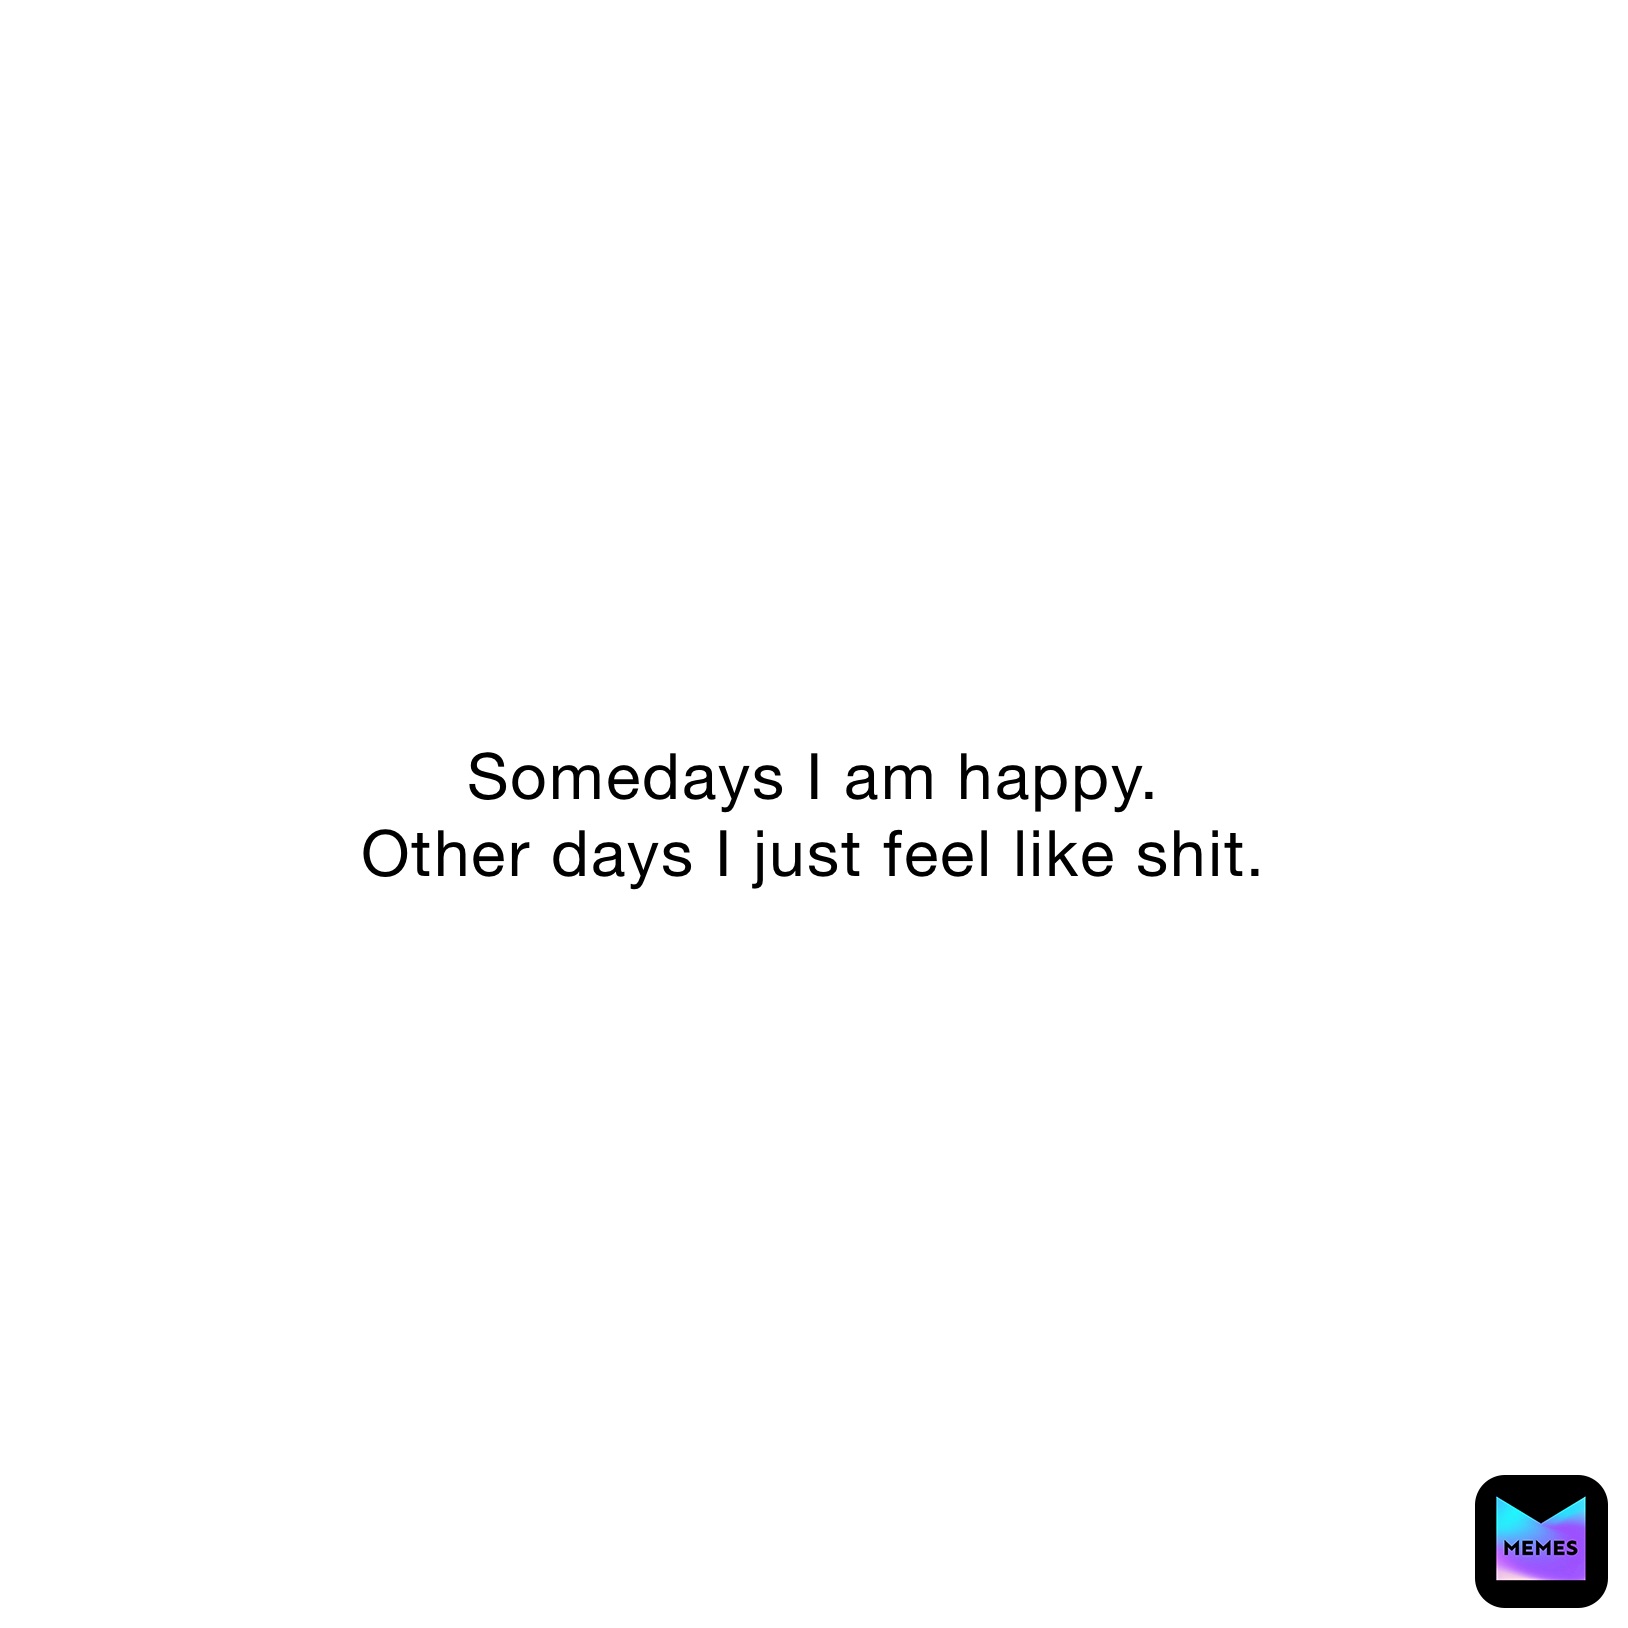 Somedays I am happy.
Other days I just feel like shit.